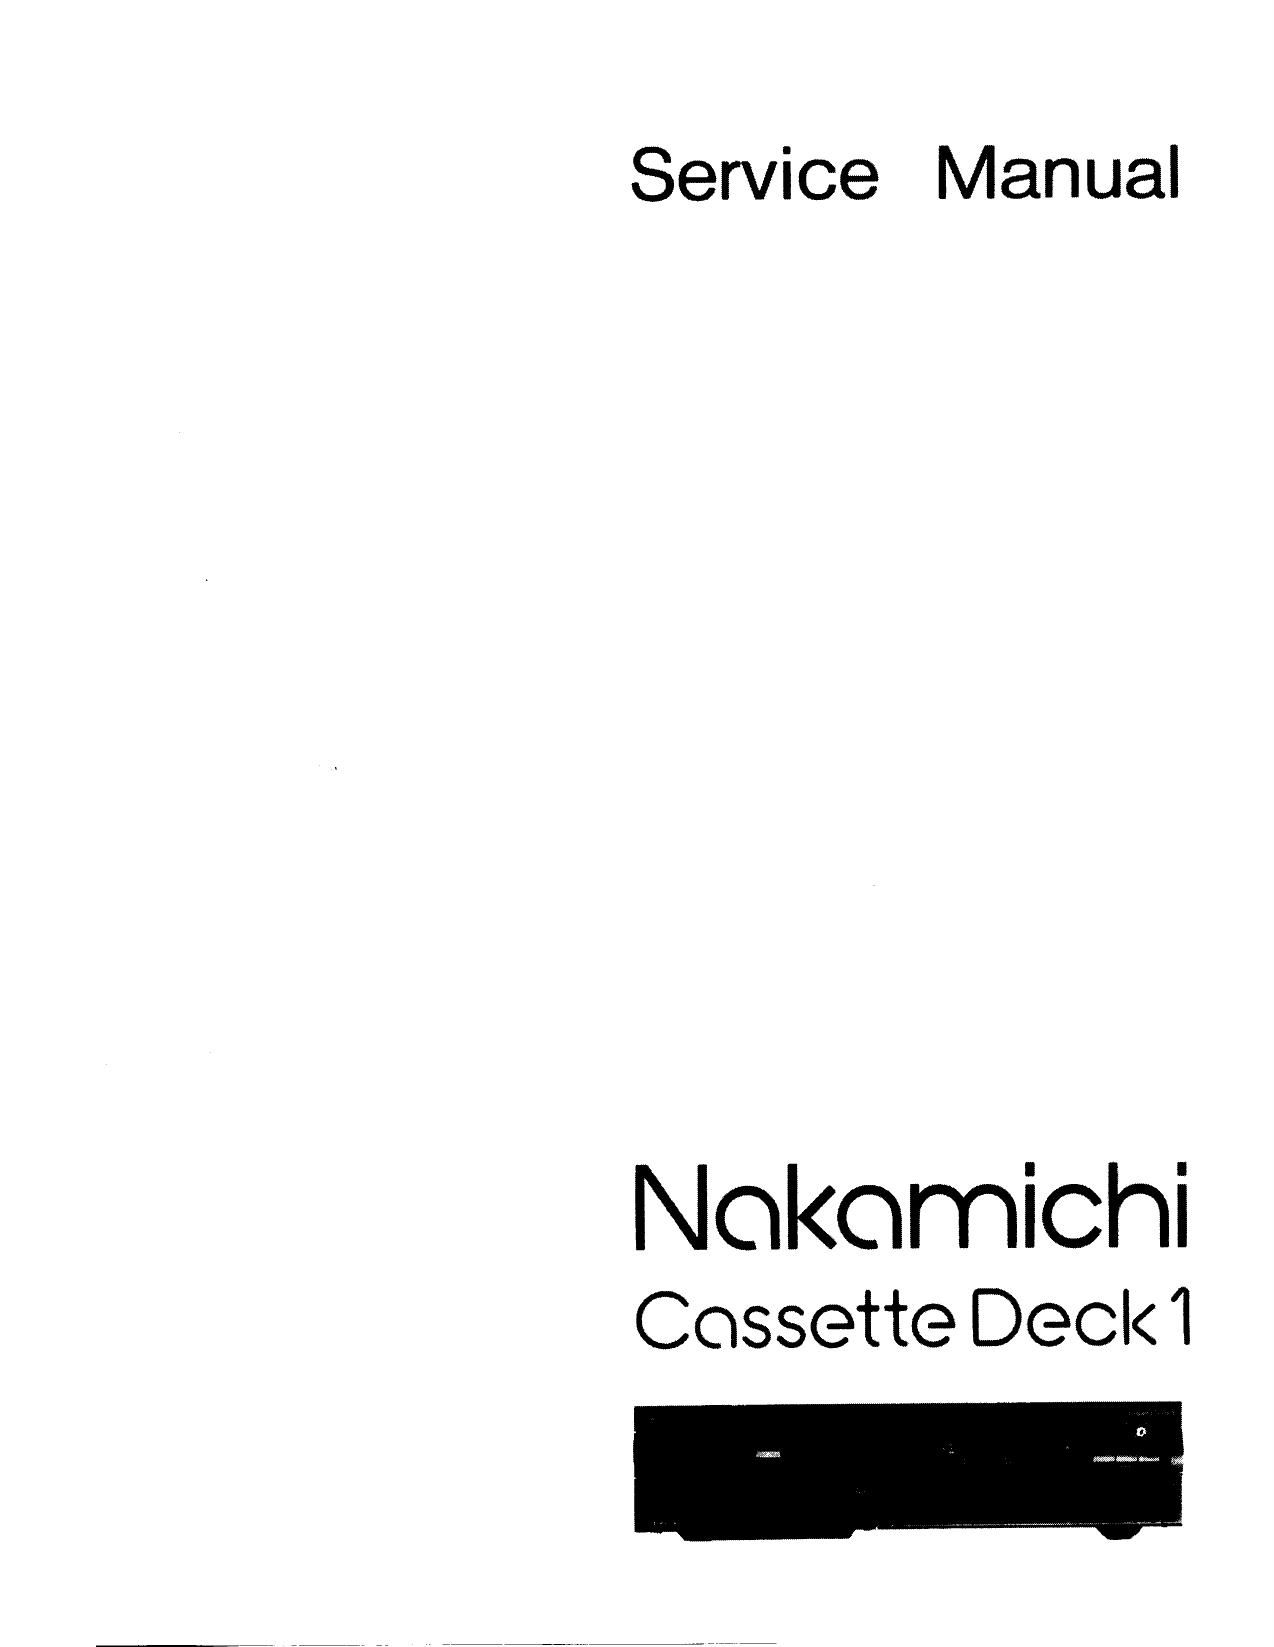 Nakamichi Cassette Deck 1 Service Manual